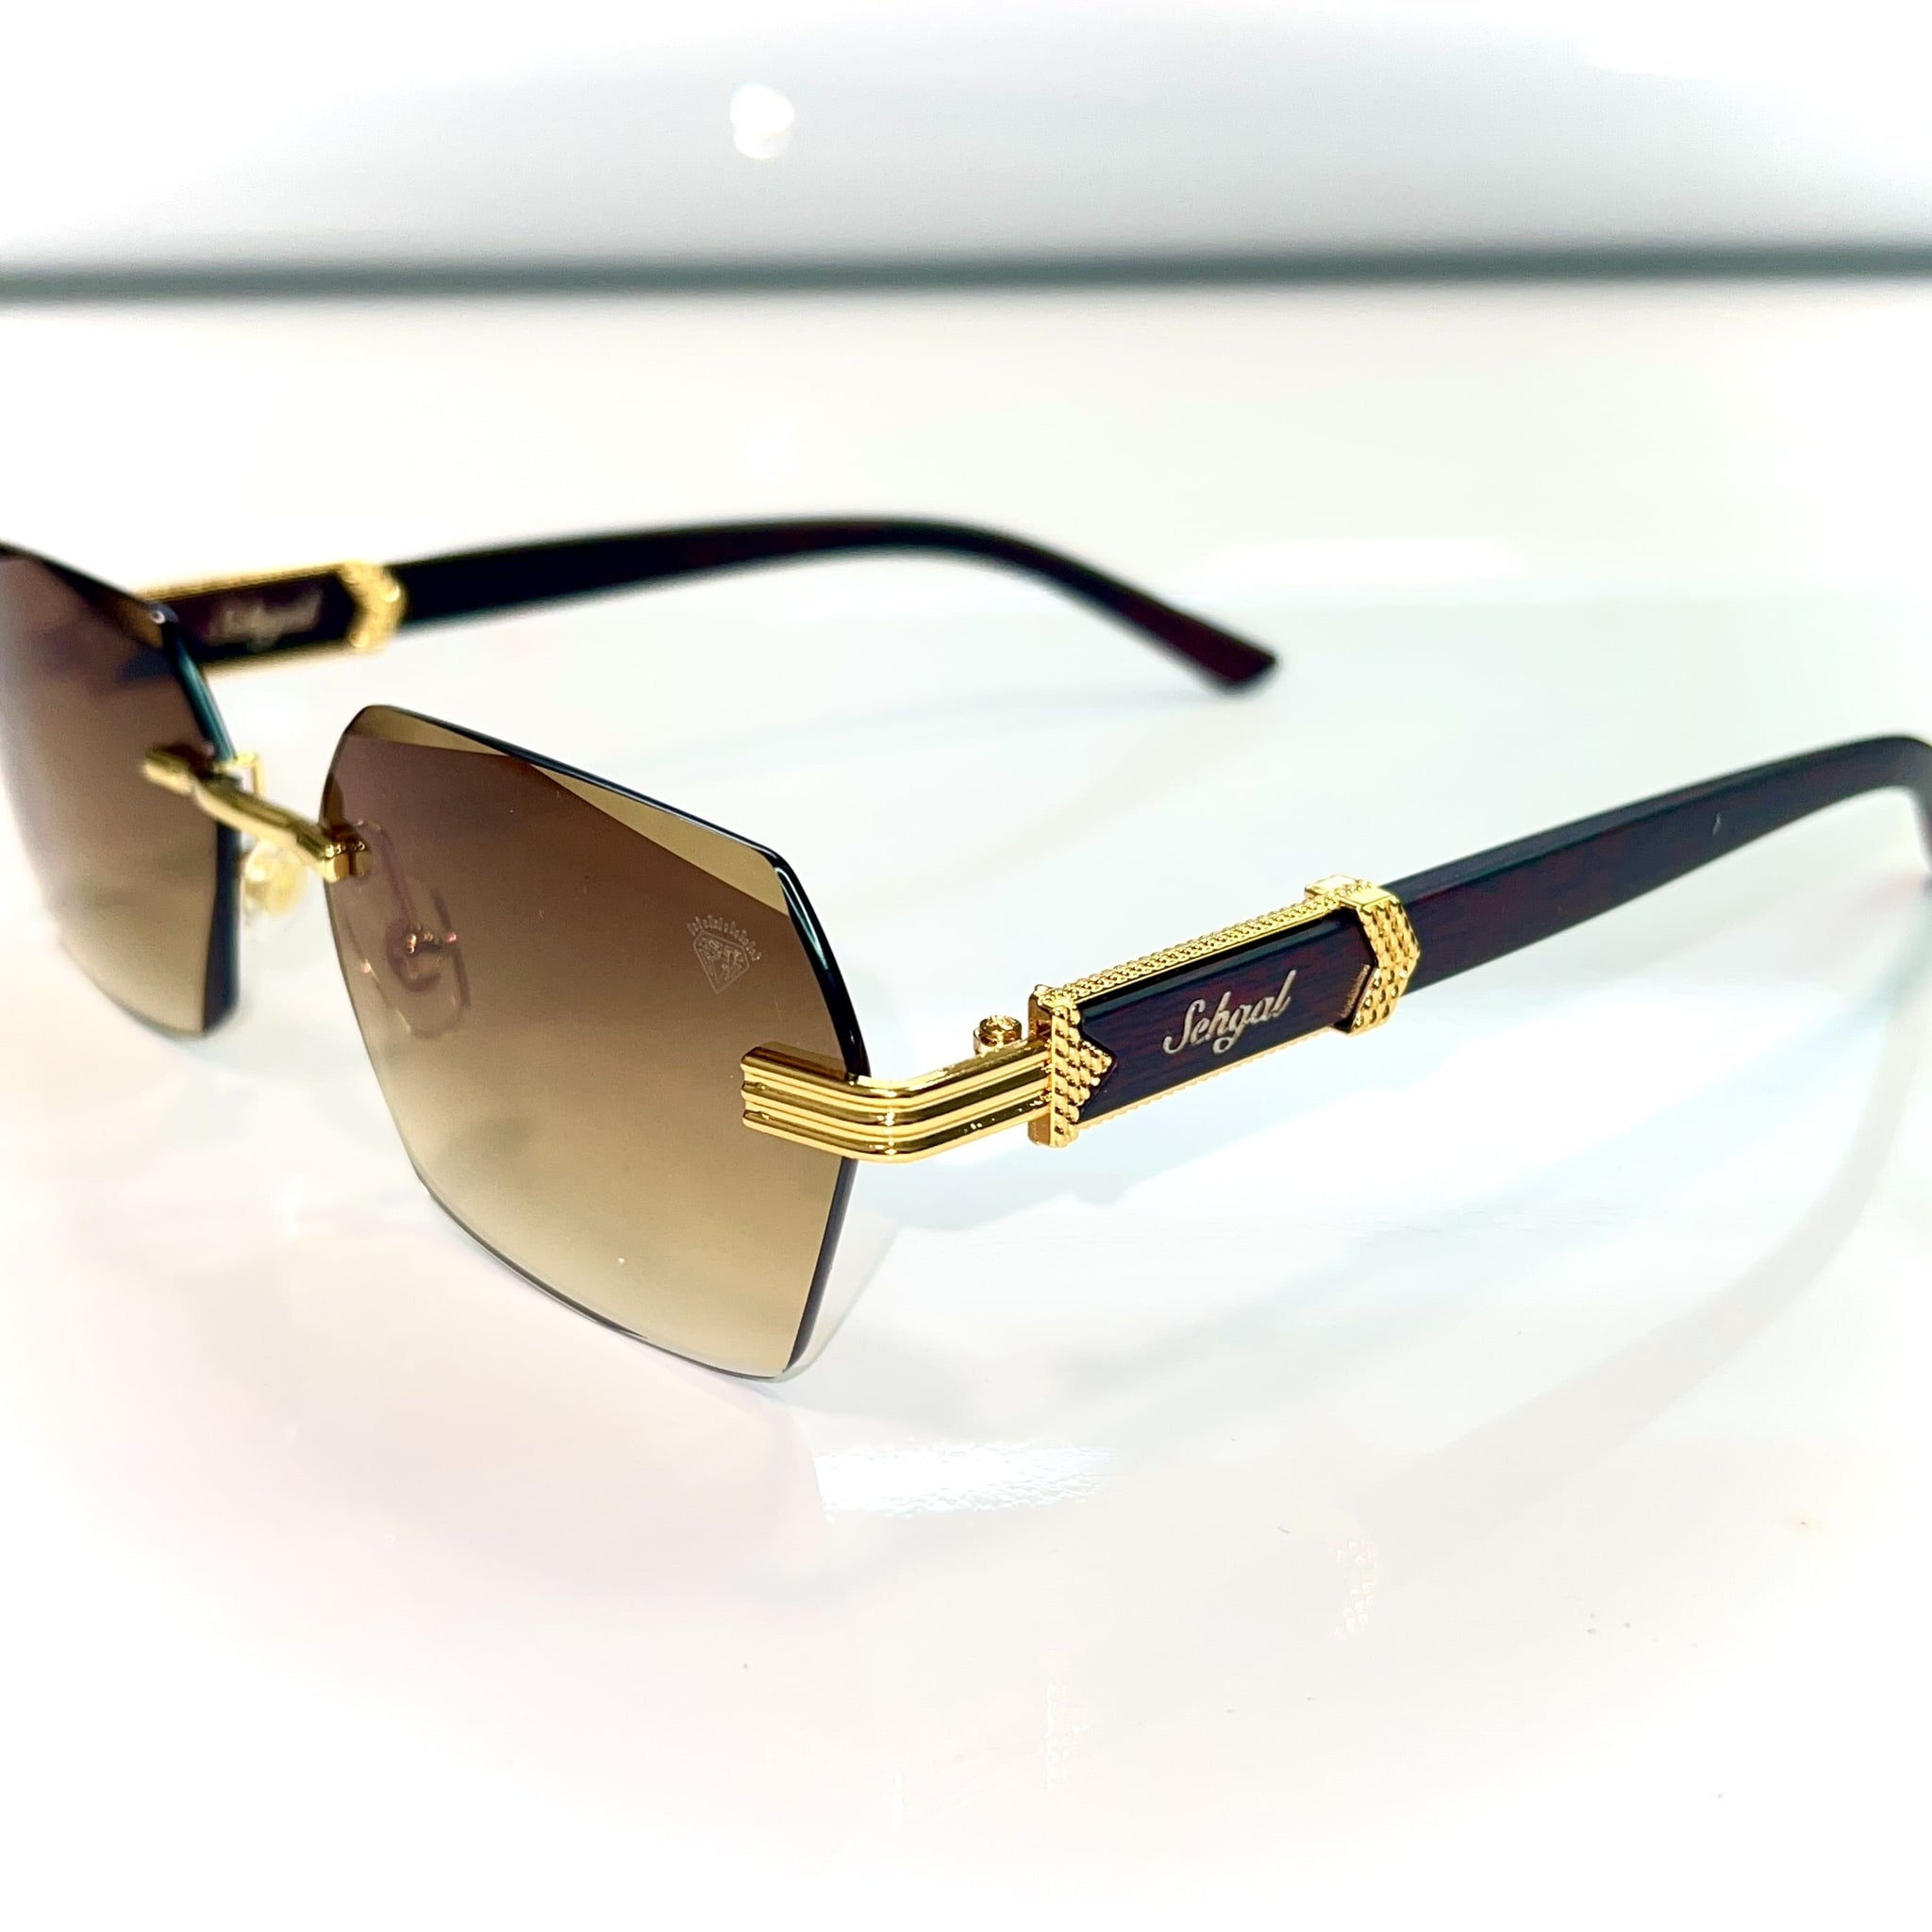 Sehgal Woodcut Glasses - 14k gold plated - Brown shade - Gold / Woodgrain Frame